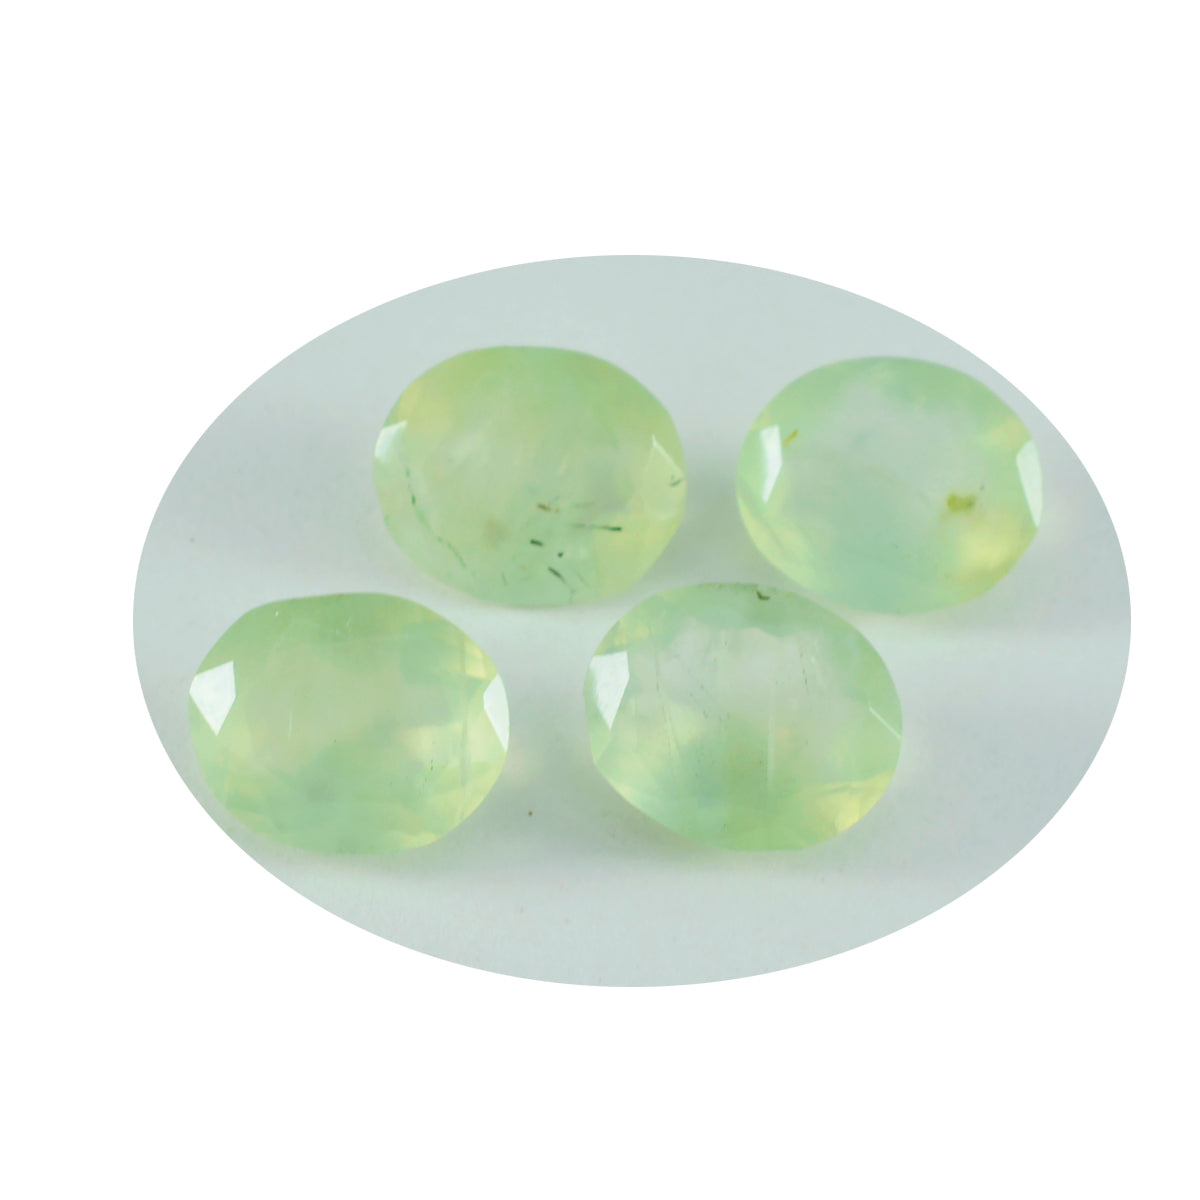 Riyogems 1PC groene prehniet gefacetteerde 10x14 mm ovale vorm mooie kwaliteitsedelstenen